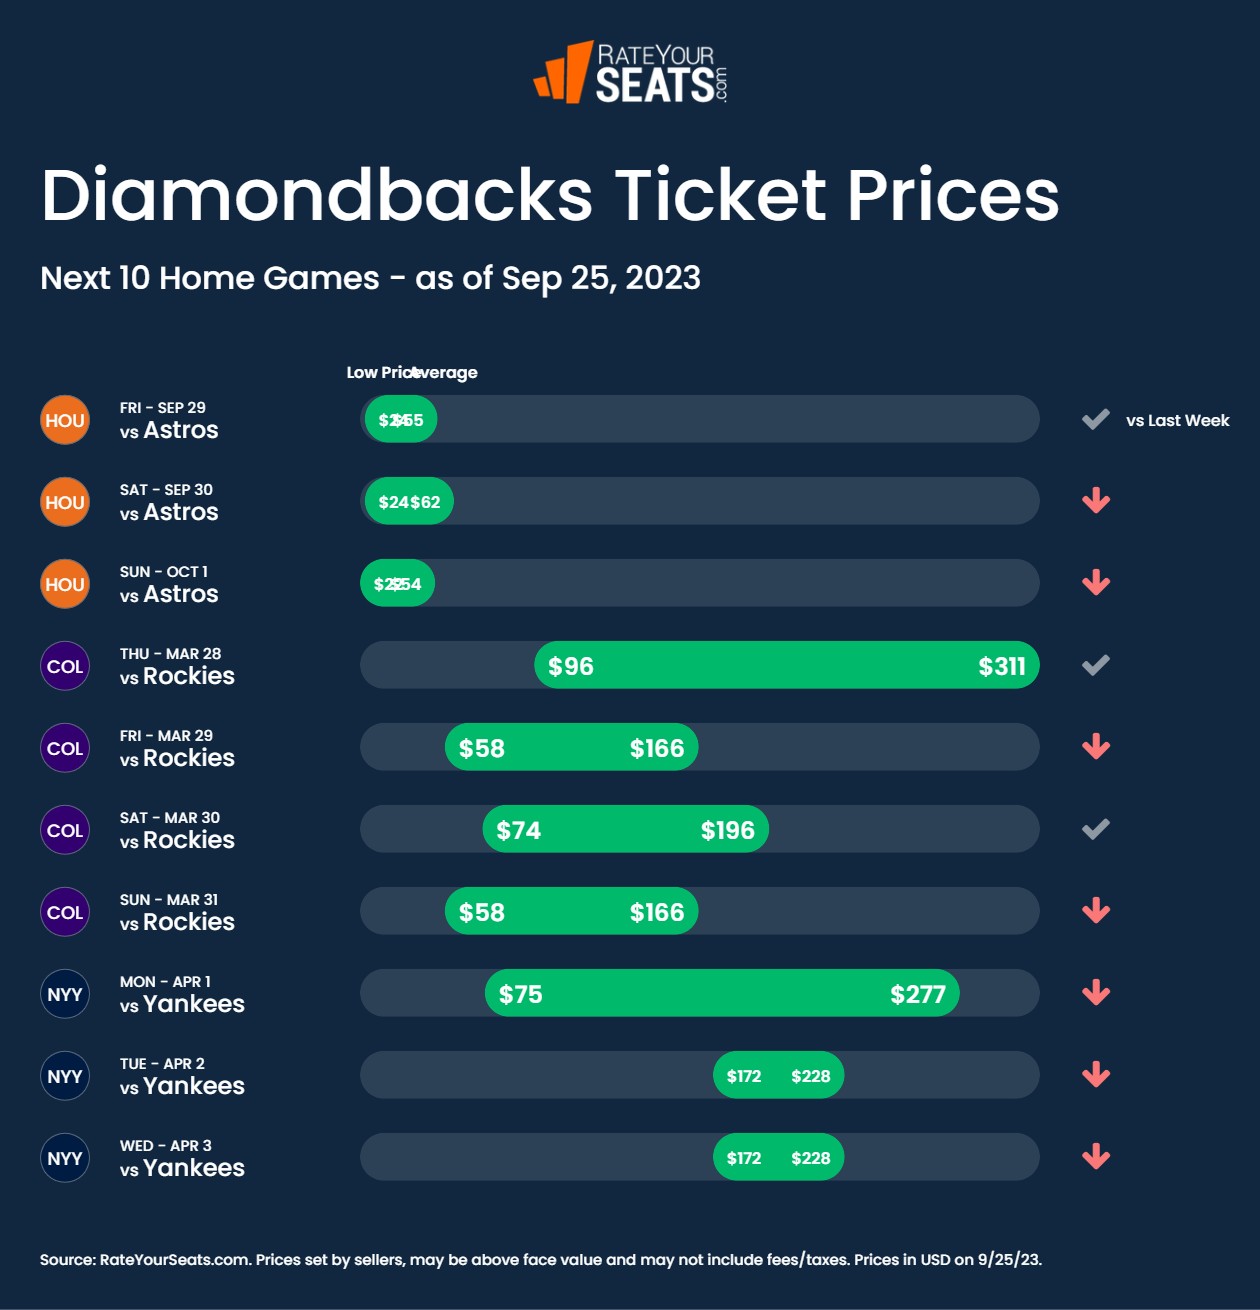 Diamondbacks tickets pricing week of September 25 2023